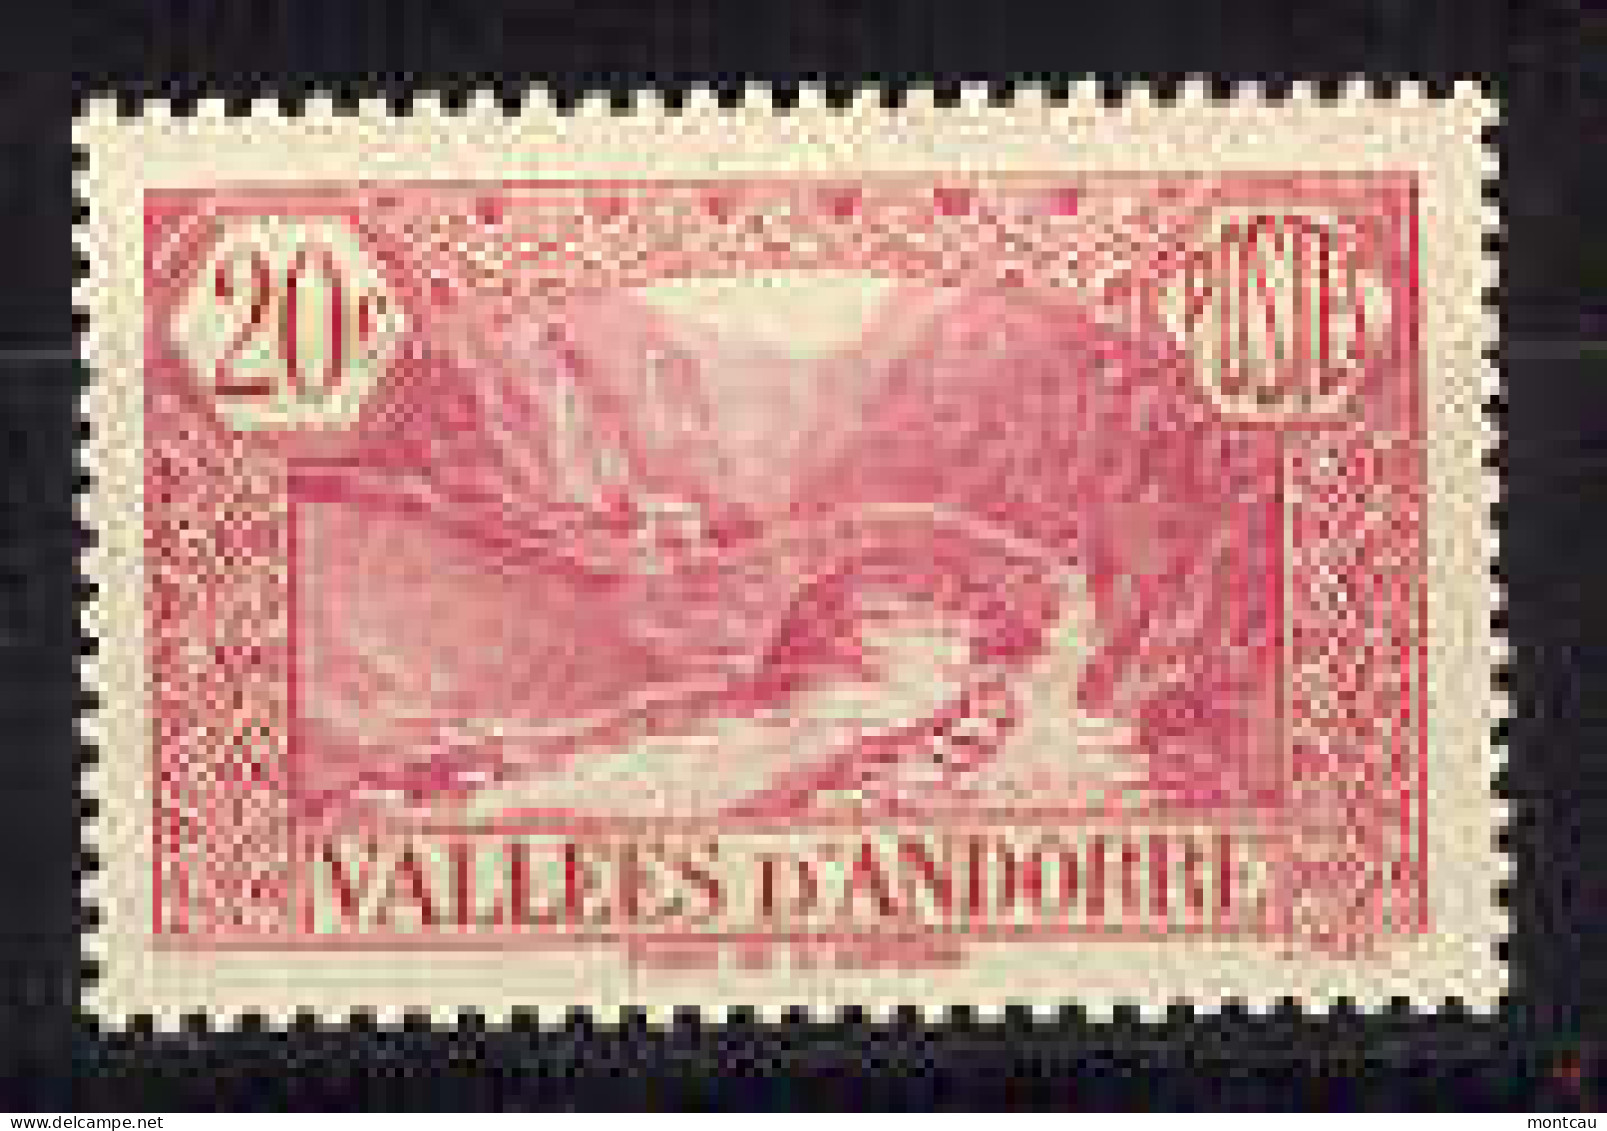 Andorra -Franc 1939 Lanscape Yvert 30 (**) - Nuovi